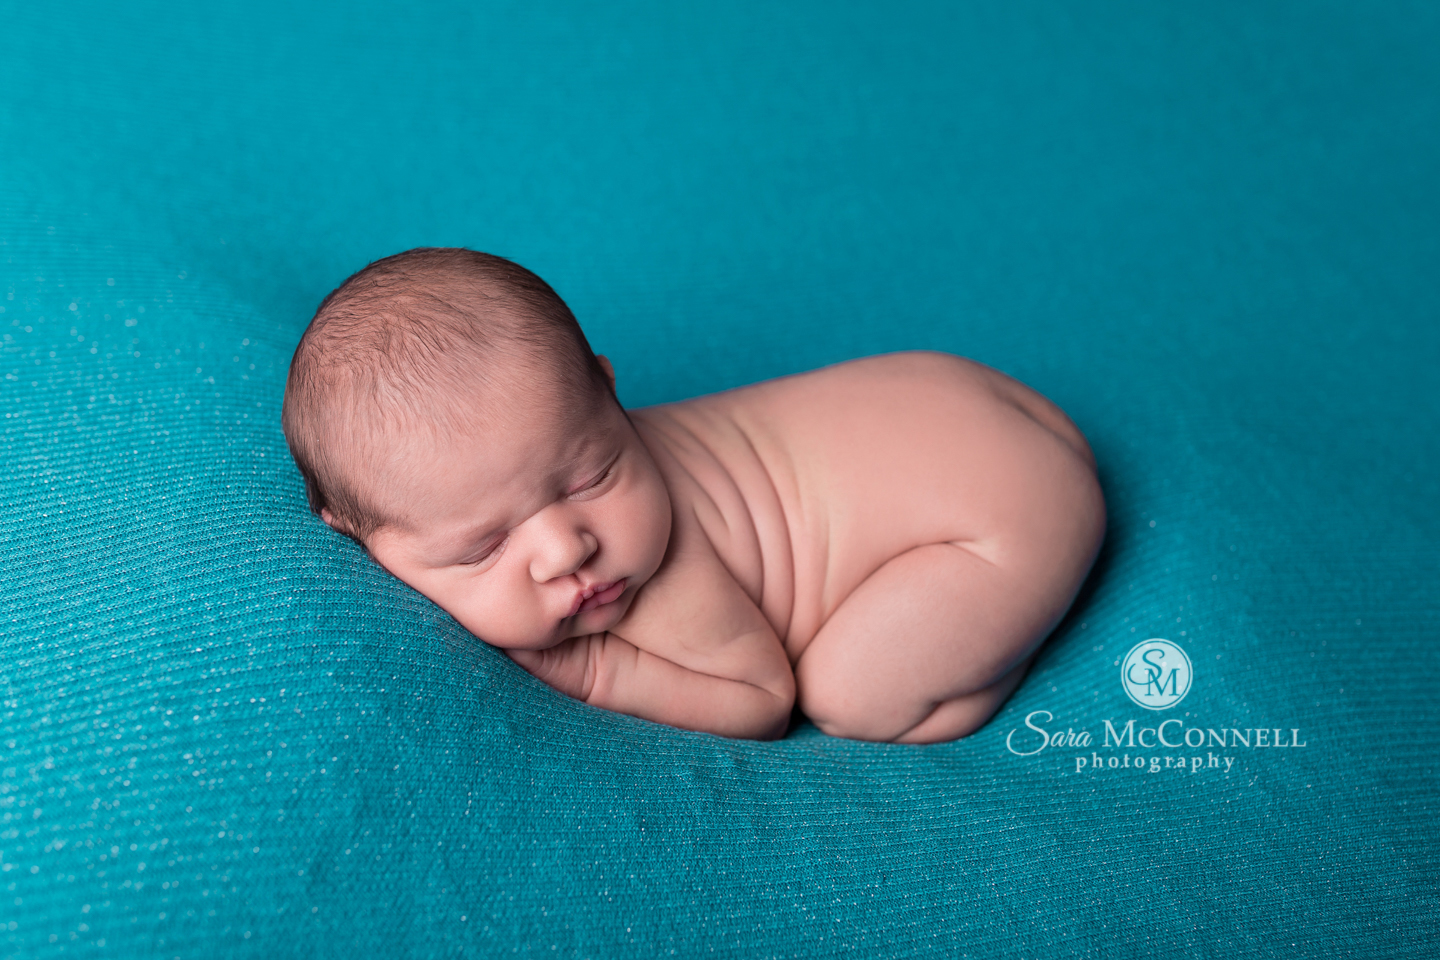 Ottawa Newborn Photos | A favourite photo